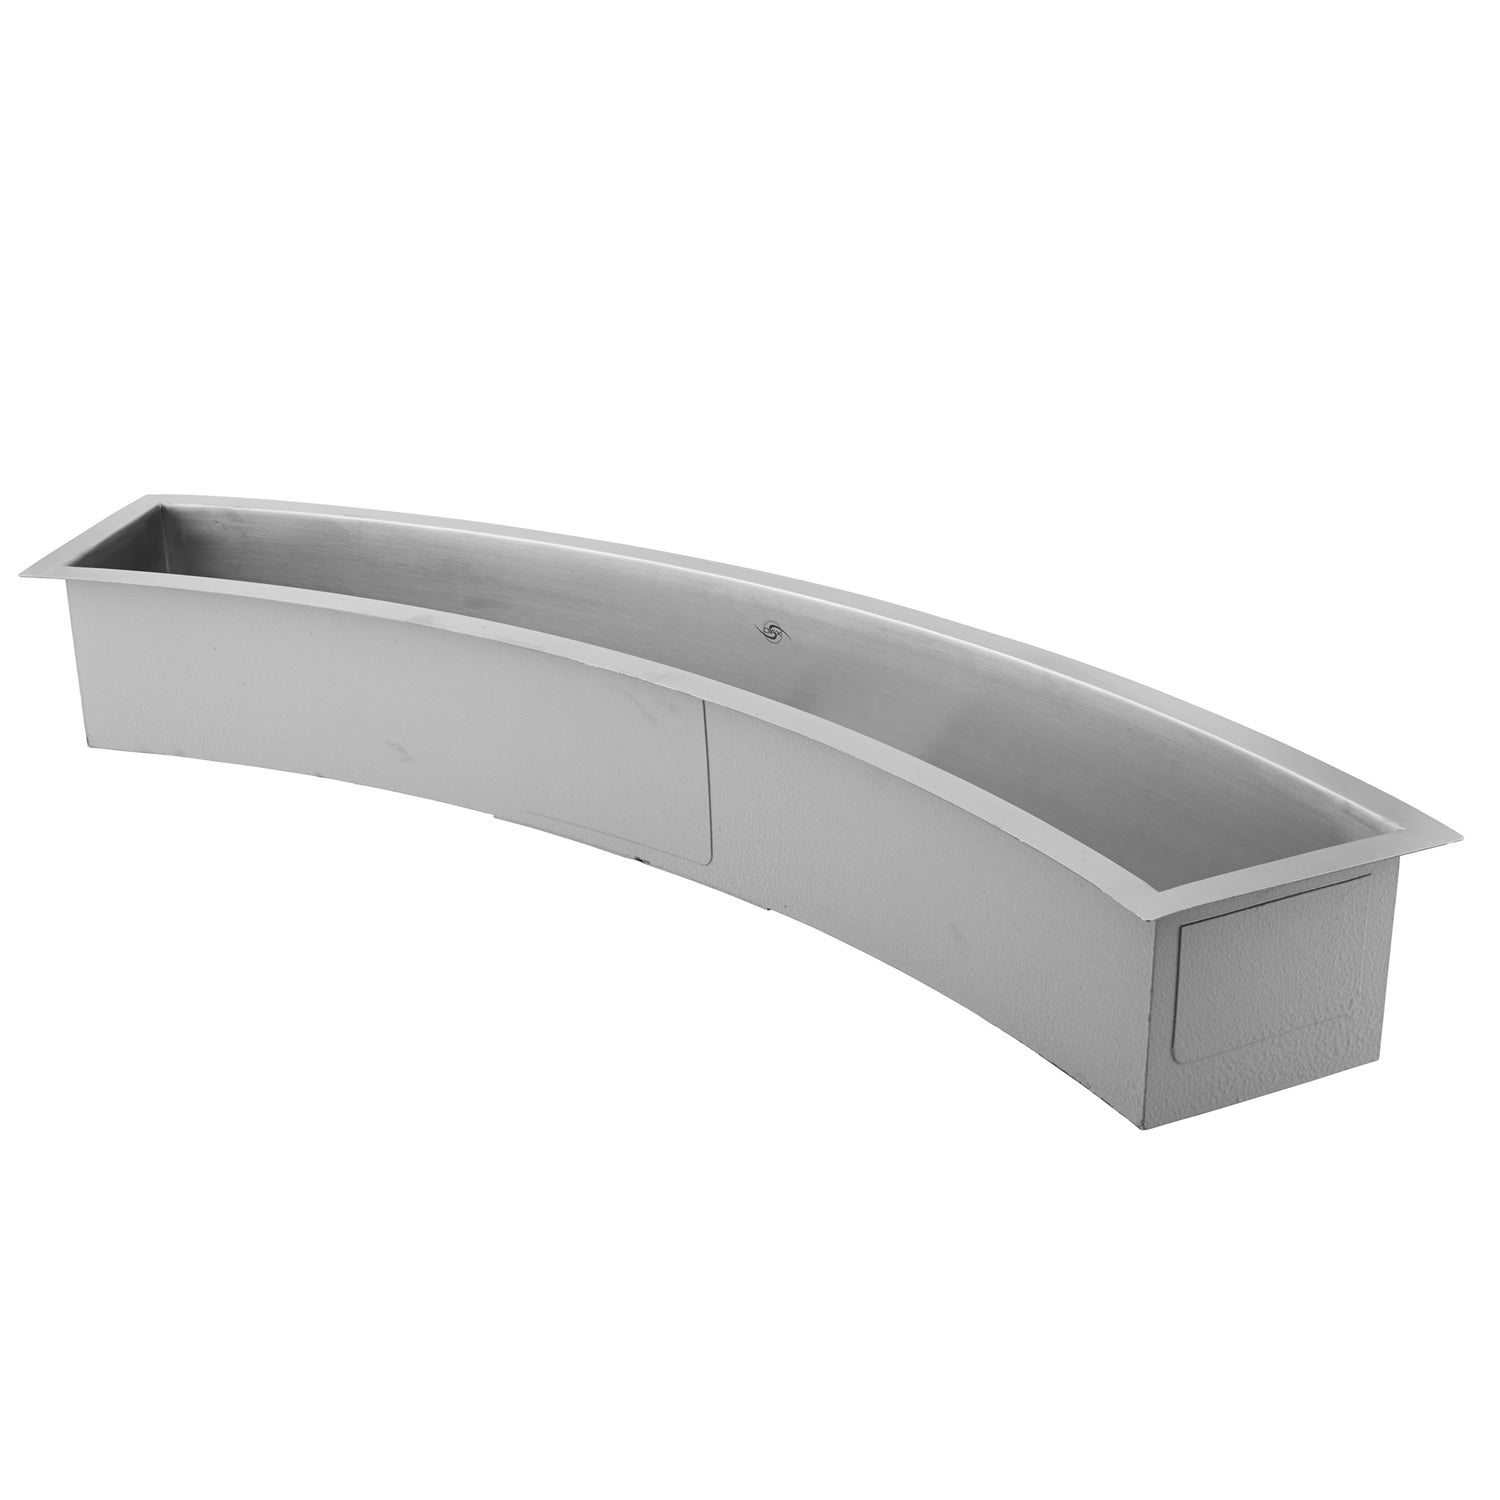 DAX Handmade Undermount Bar Sink, 16 Gauge Stainless Steel, Brushed Finish, 45 x 13 x 6 Inches (DAX-SQ-4512-C)